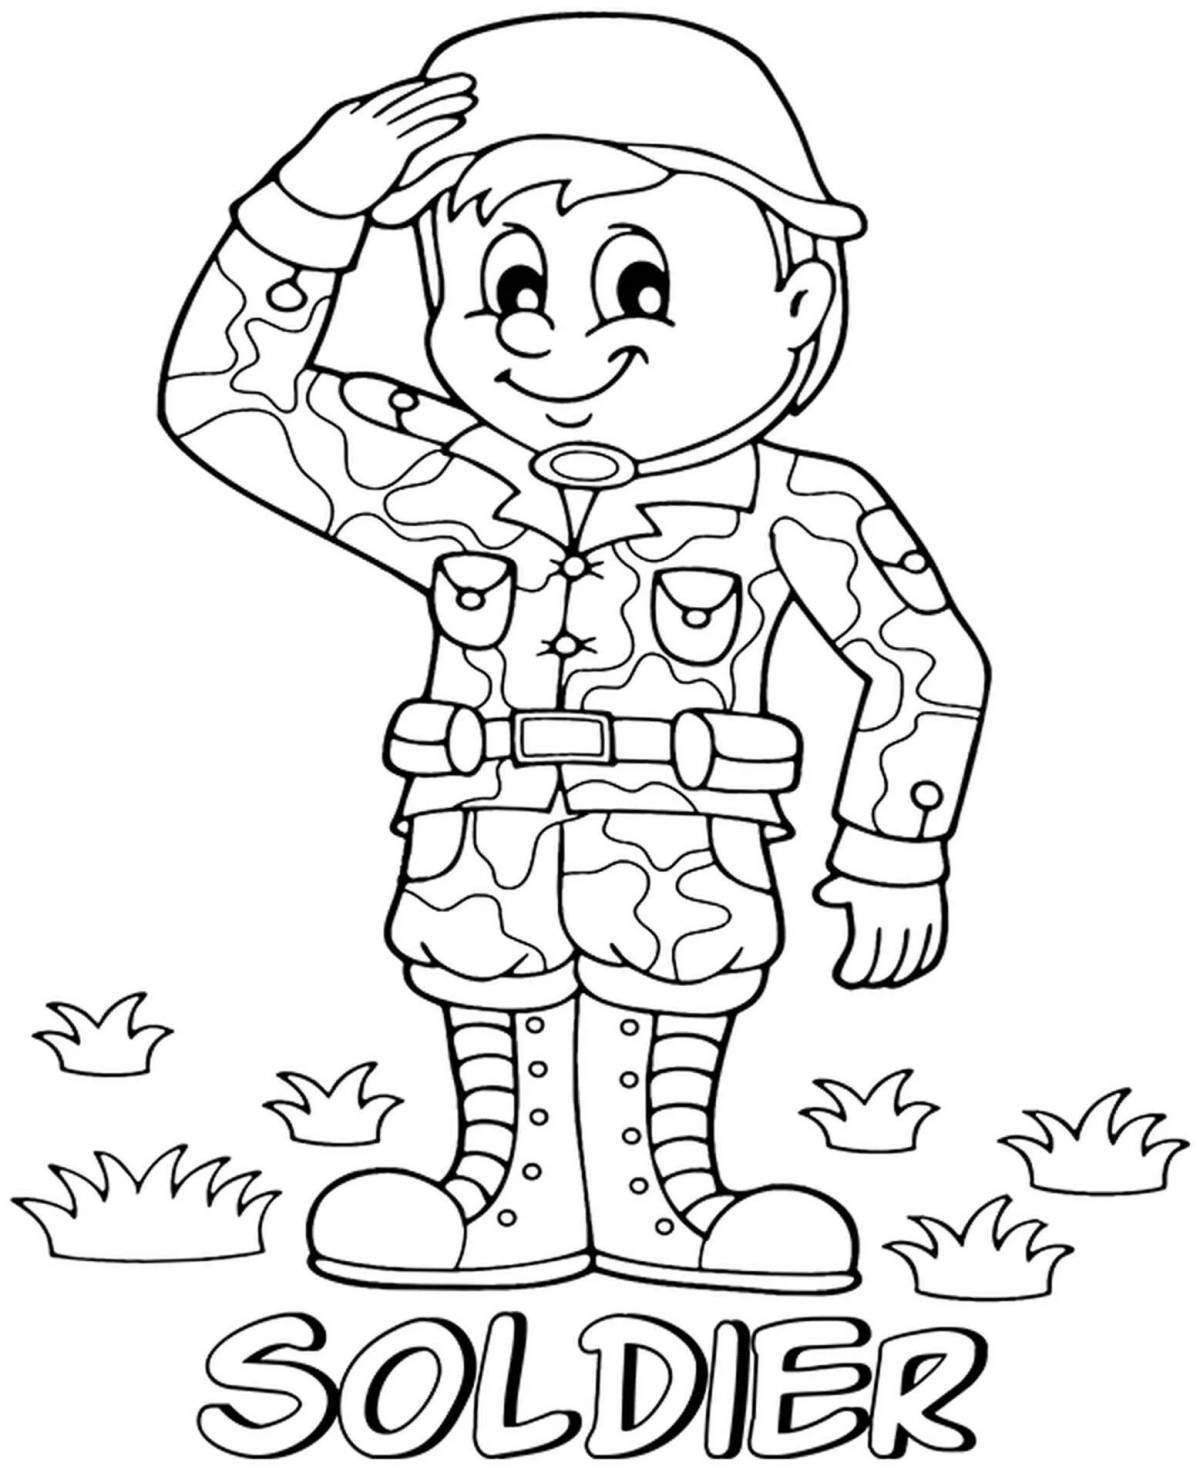 Раскраска для солдата от детей